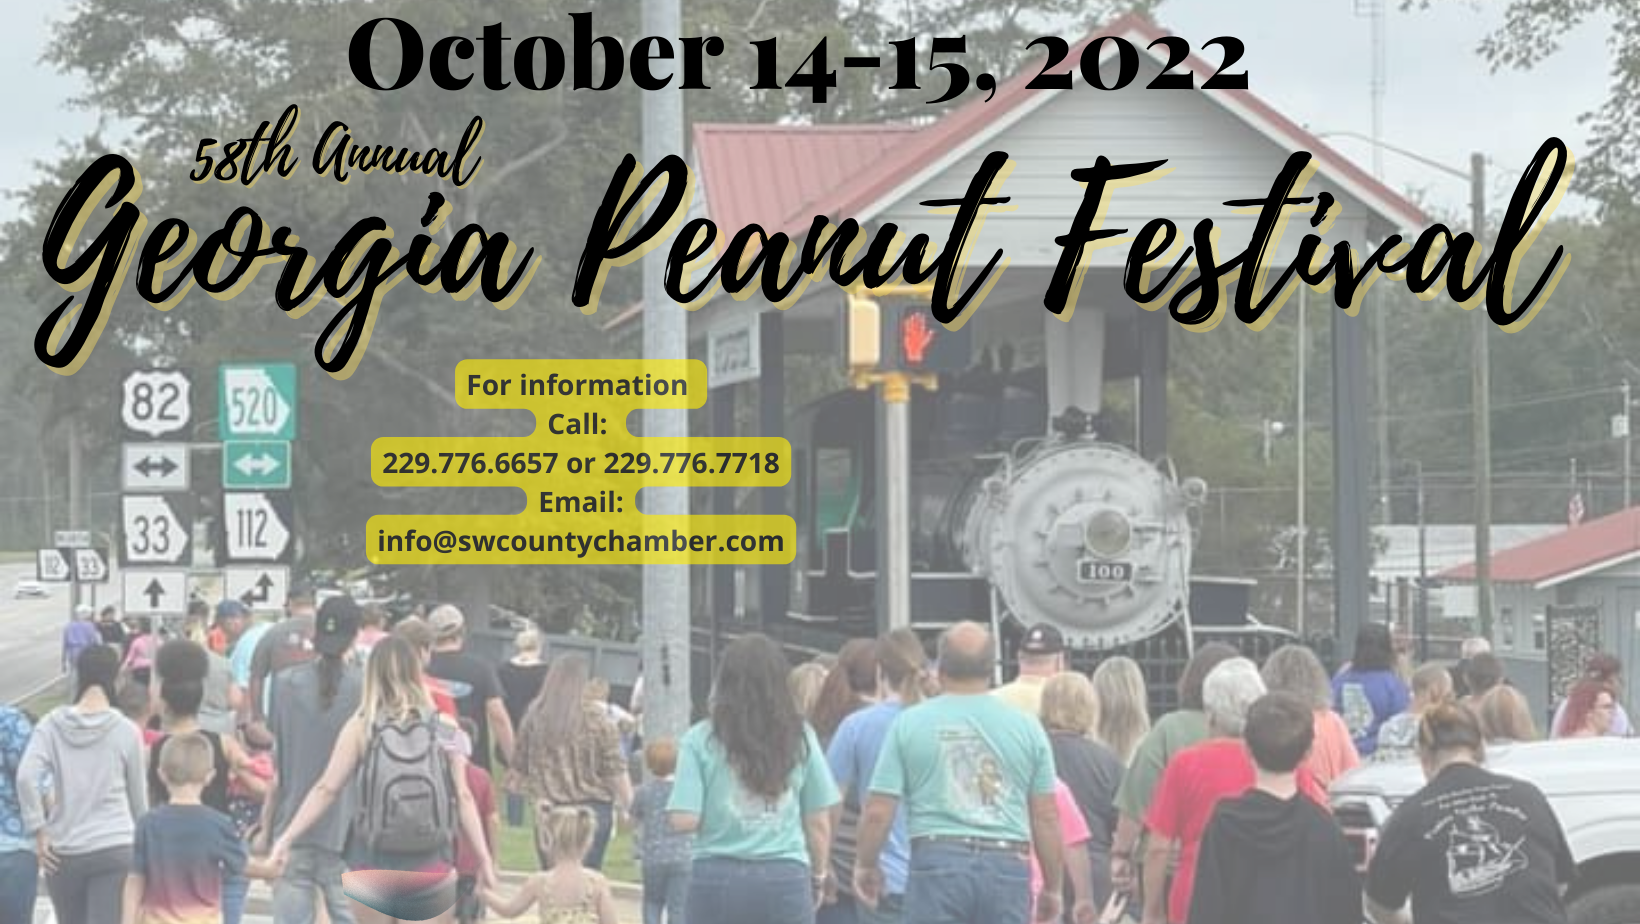 Festival GA Peanut Festival